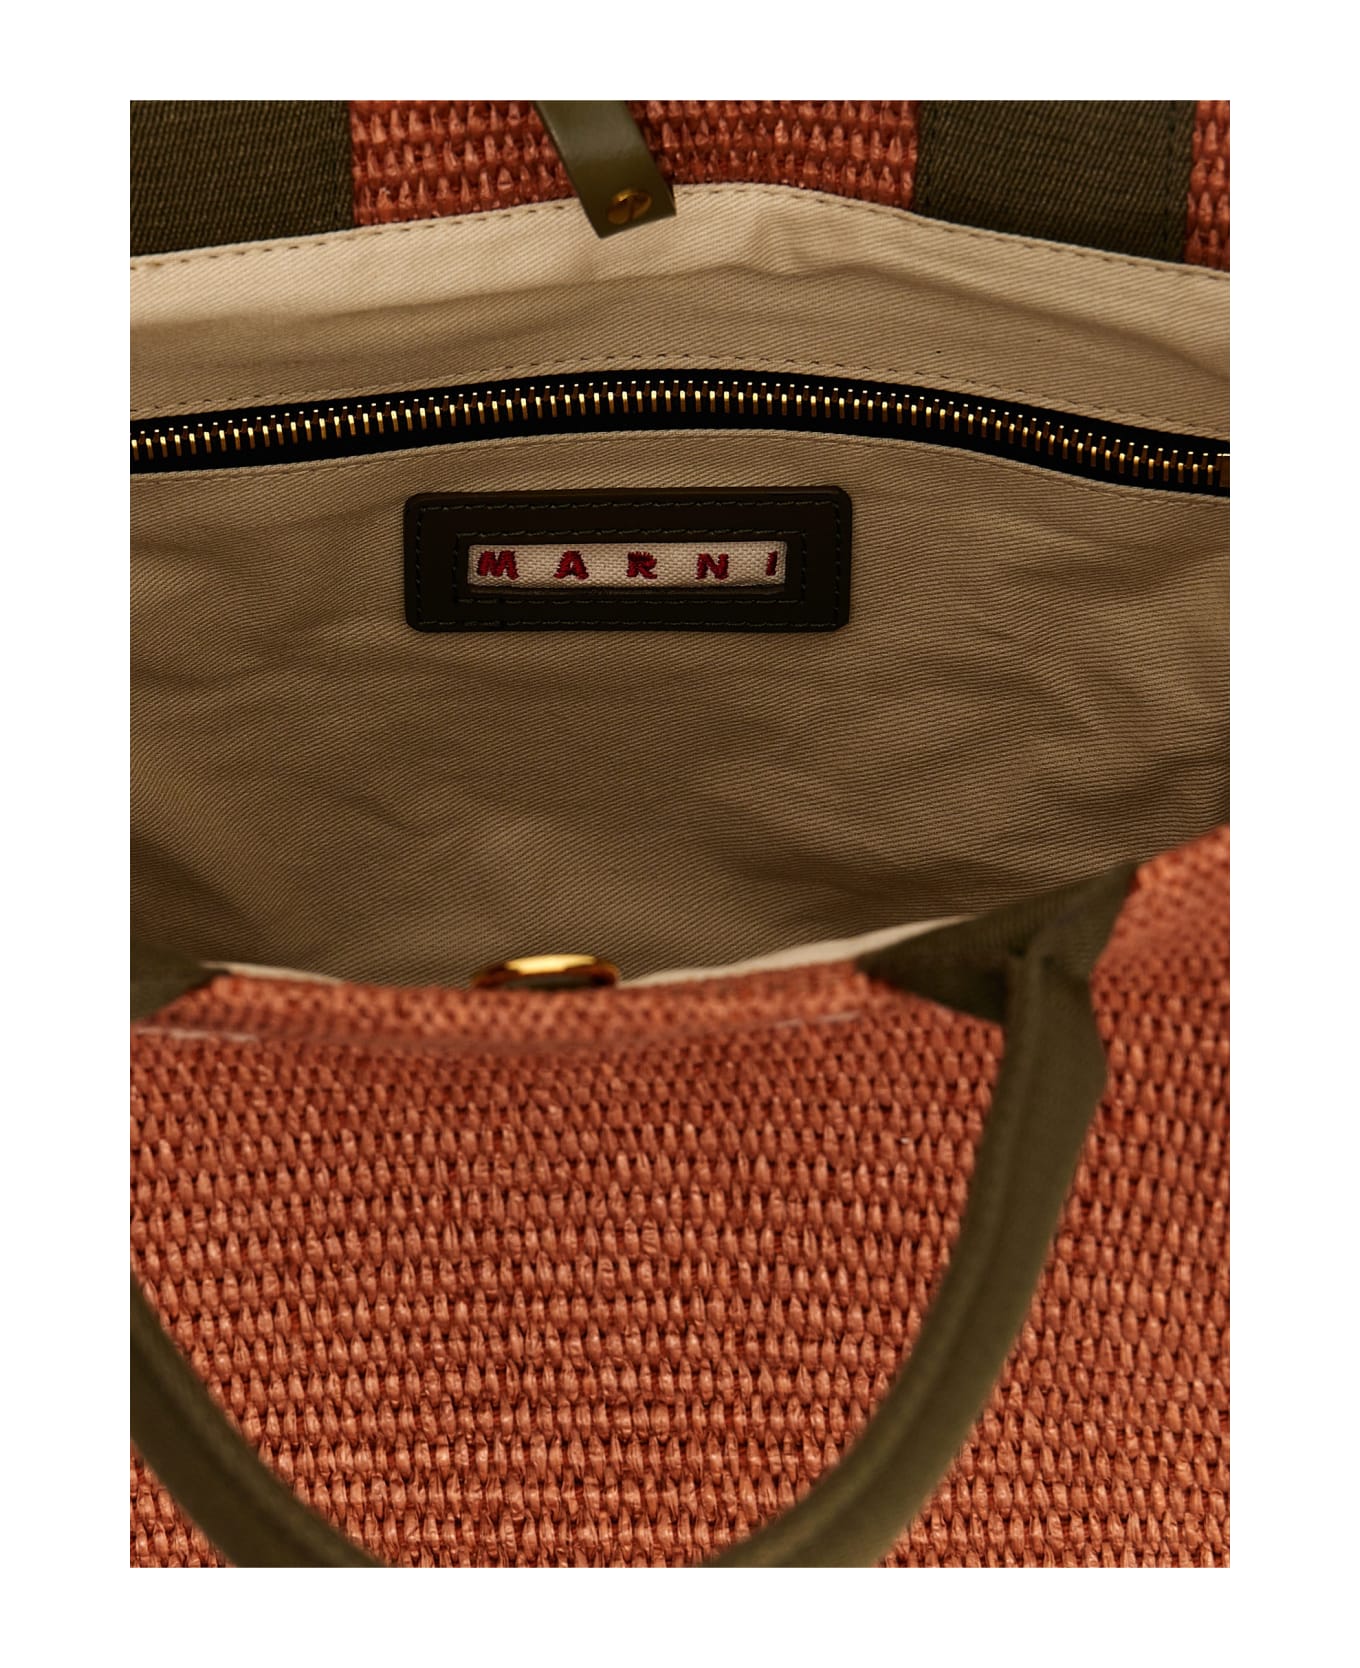 Marni 'east/west' Small Shopping Bag Marni - Multicolor